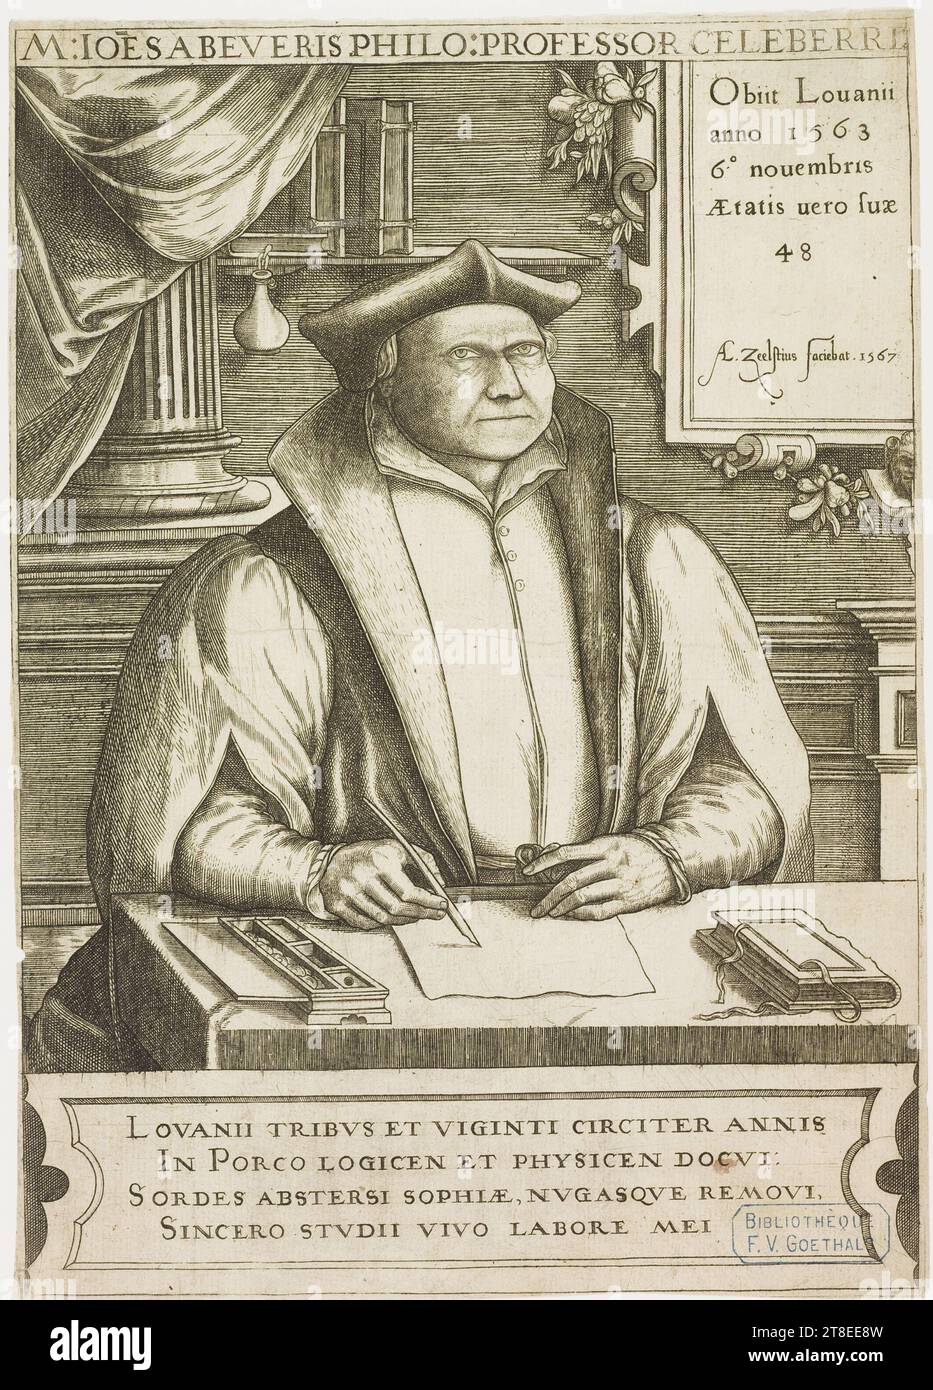 Portrait of Joannes Beverus, writing at his worktable. Obiit Louanii anno 1563 6° nouembris Ætatis uero fuæ 48 A. Zeelstius faciebat. 1567. M: IOES A BEVERIS PHILO: PROFESSOR CELEBERRI. LOVANII TRIBVS ET VIGINTI CIRCITER ANNIS IN PORCO LOGICEN ET PHYSICEN DOCVI SORDES ABSTERSI SOPHIÆ, NVGASQVE REMOVI SINCERO STVDII VIVO LABORE MEI. Literature reference: Ex officina, 8, 1991 Stock Photo